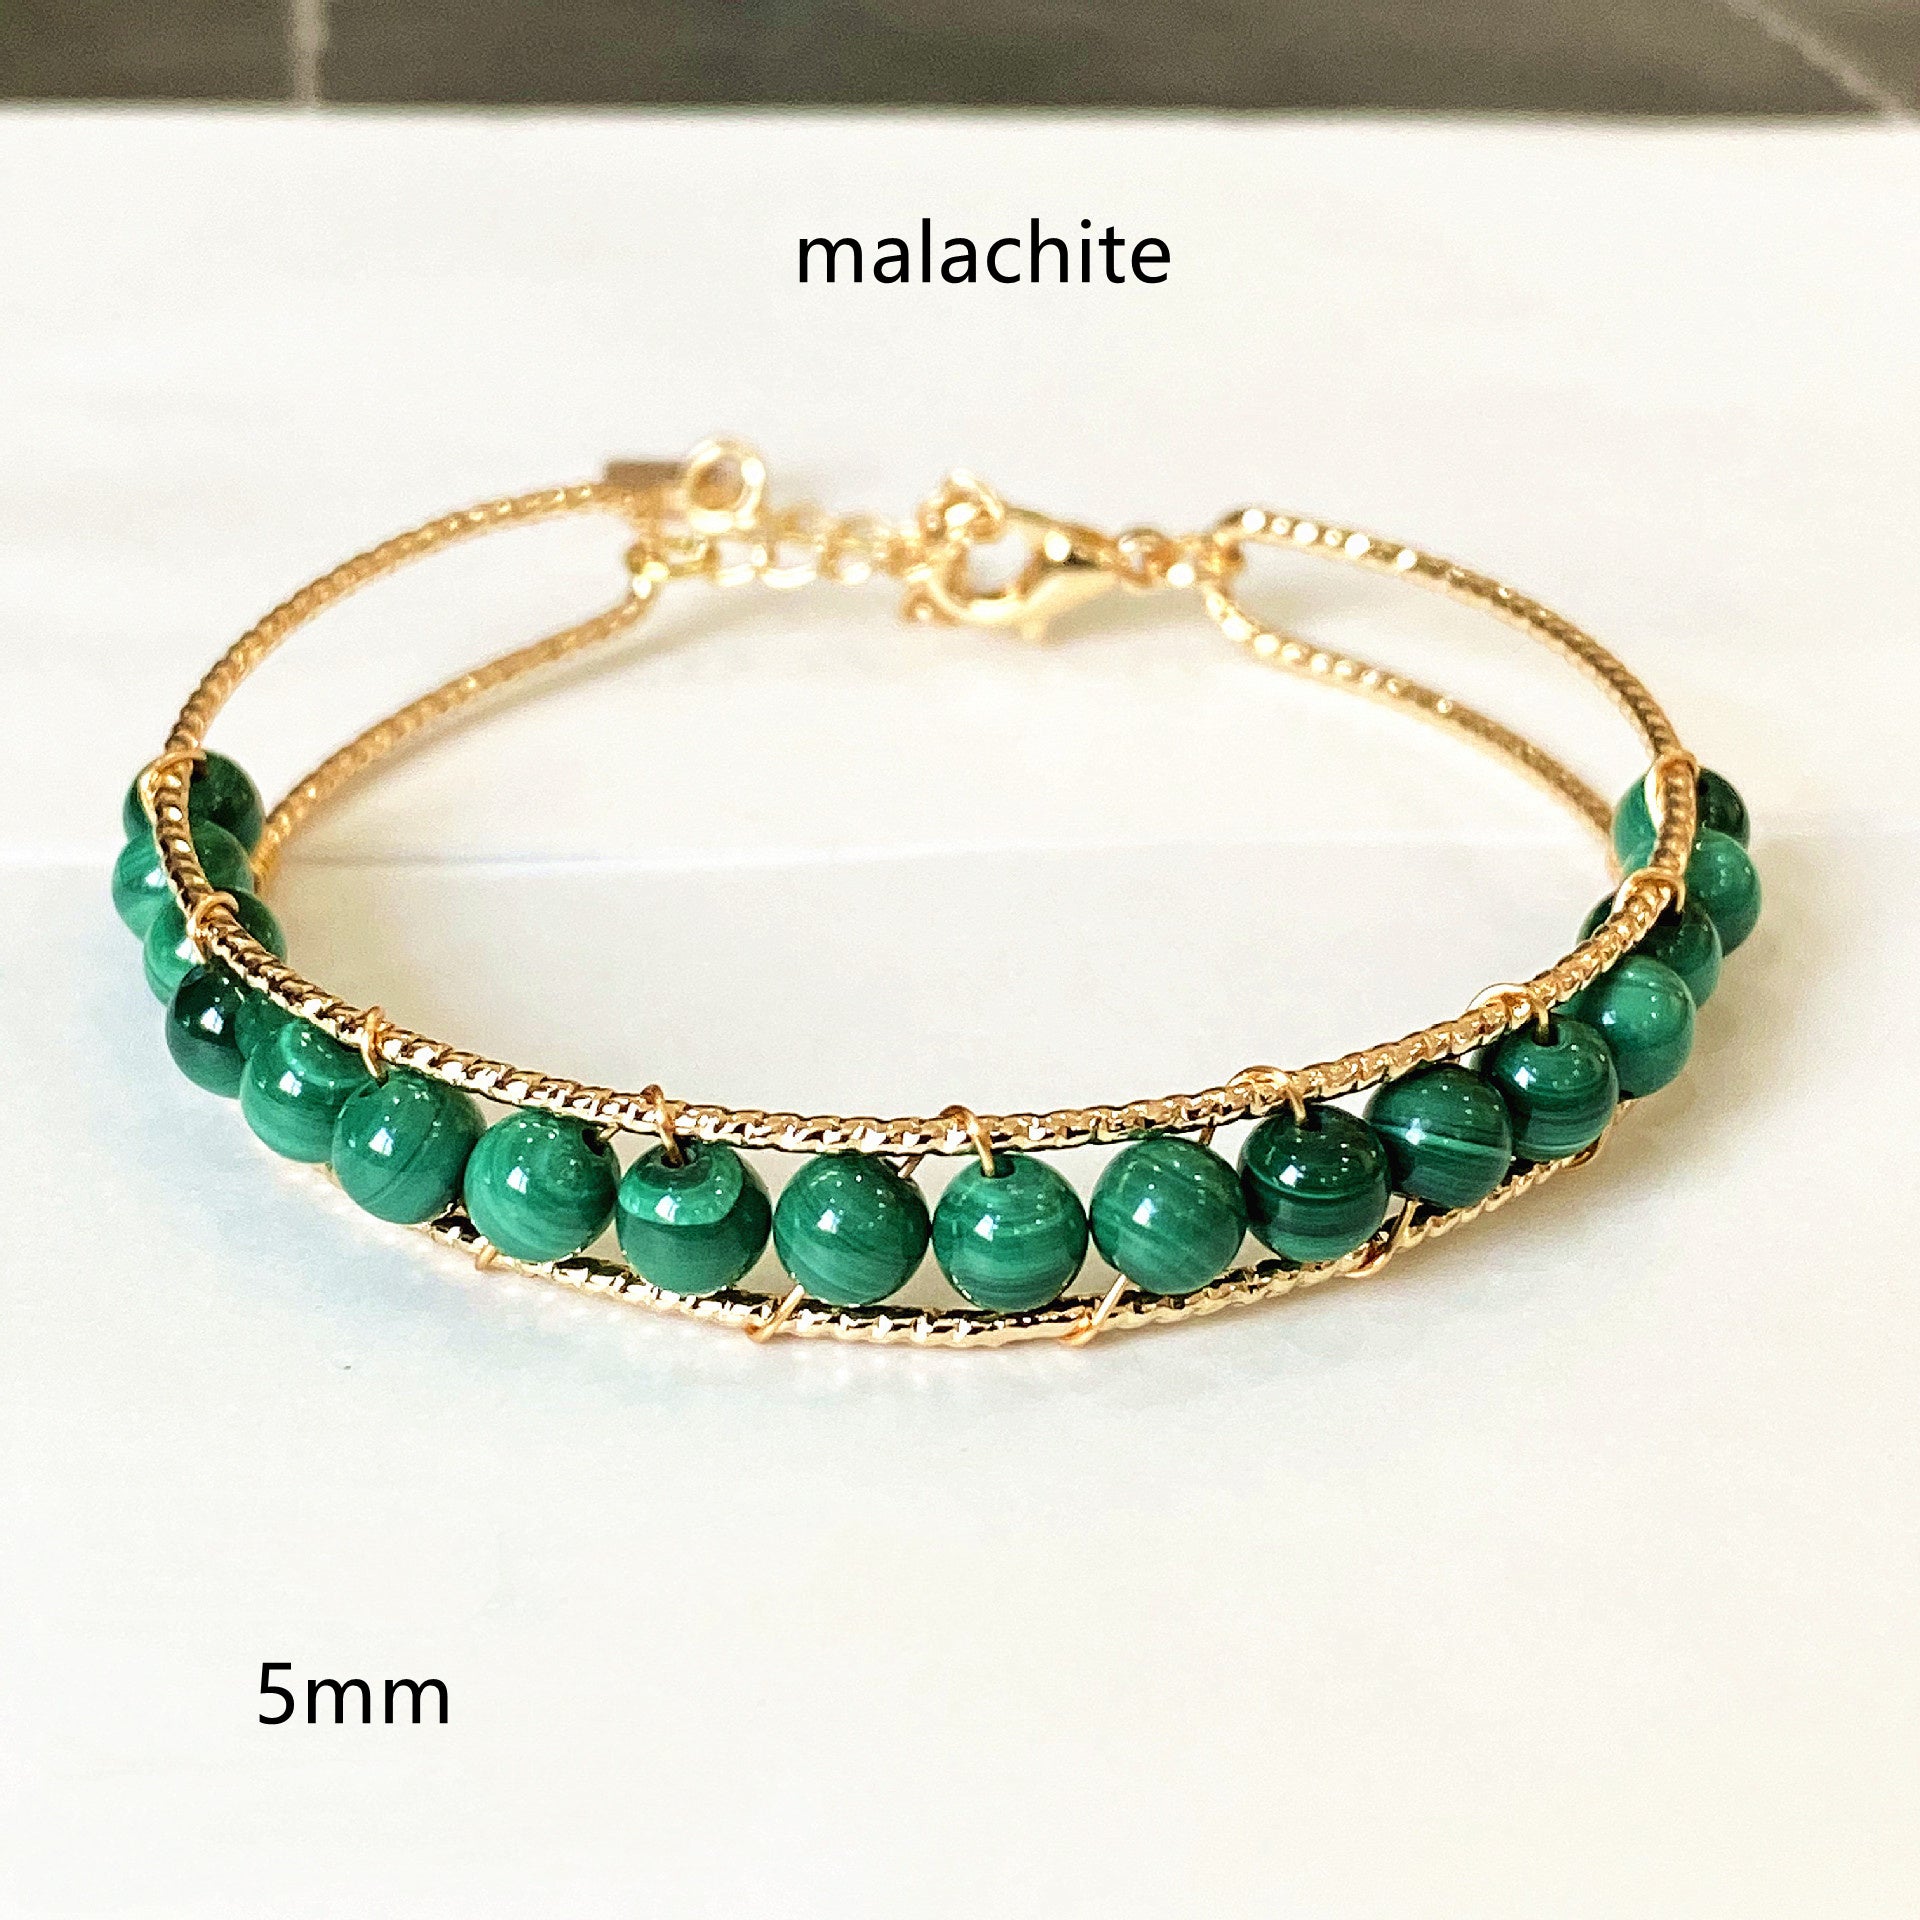 14K Gold Wrapped Fluorite Labradorite Tourmaline Bracelet, Pearl Aquamarine Rose Quartz Agate Beads Bracelet AL046